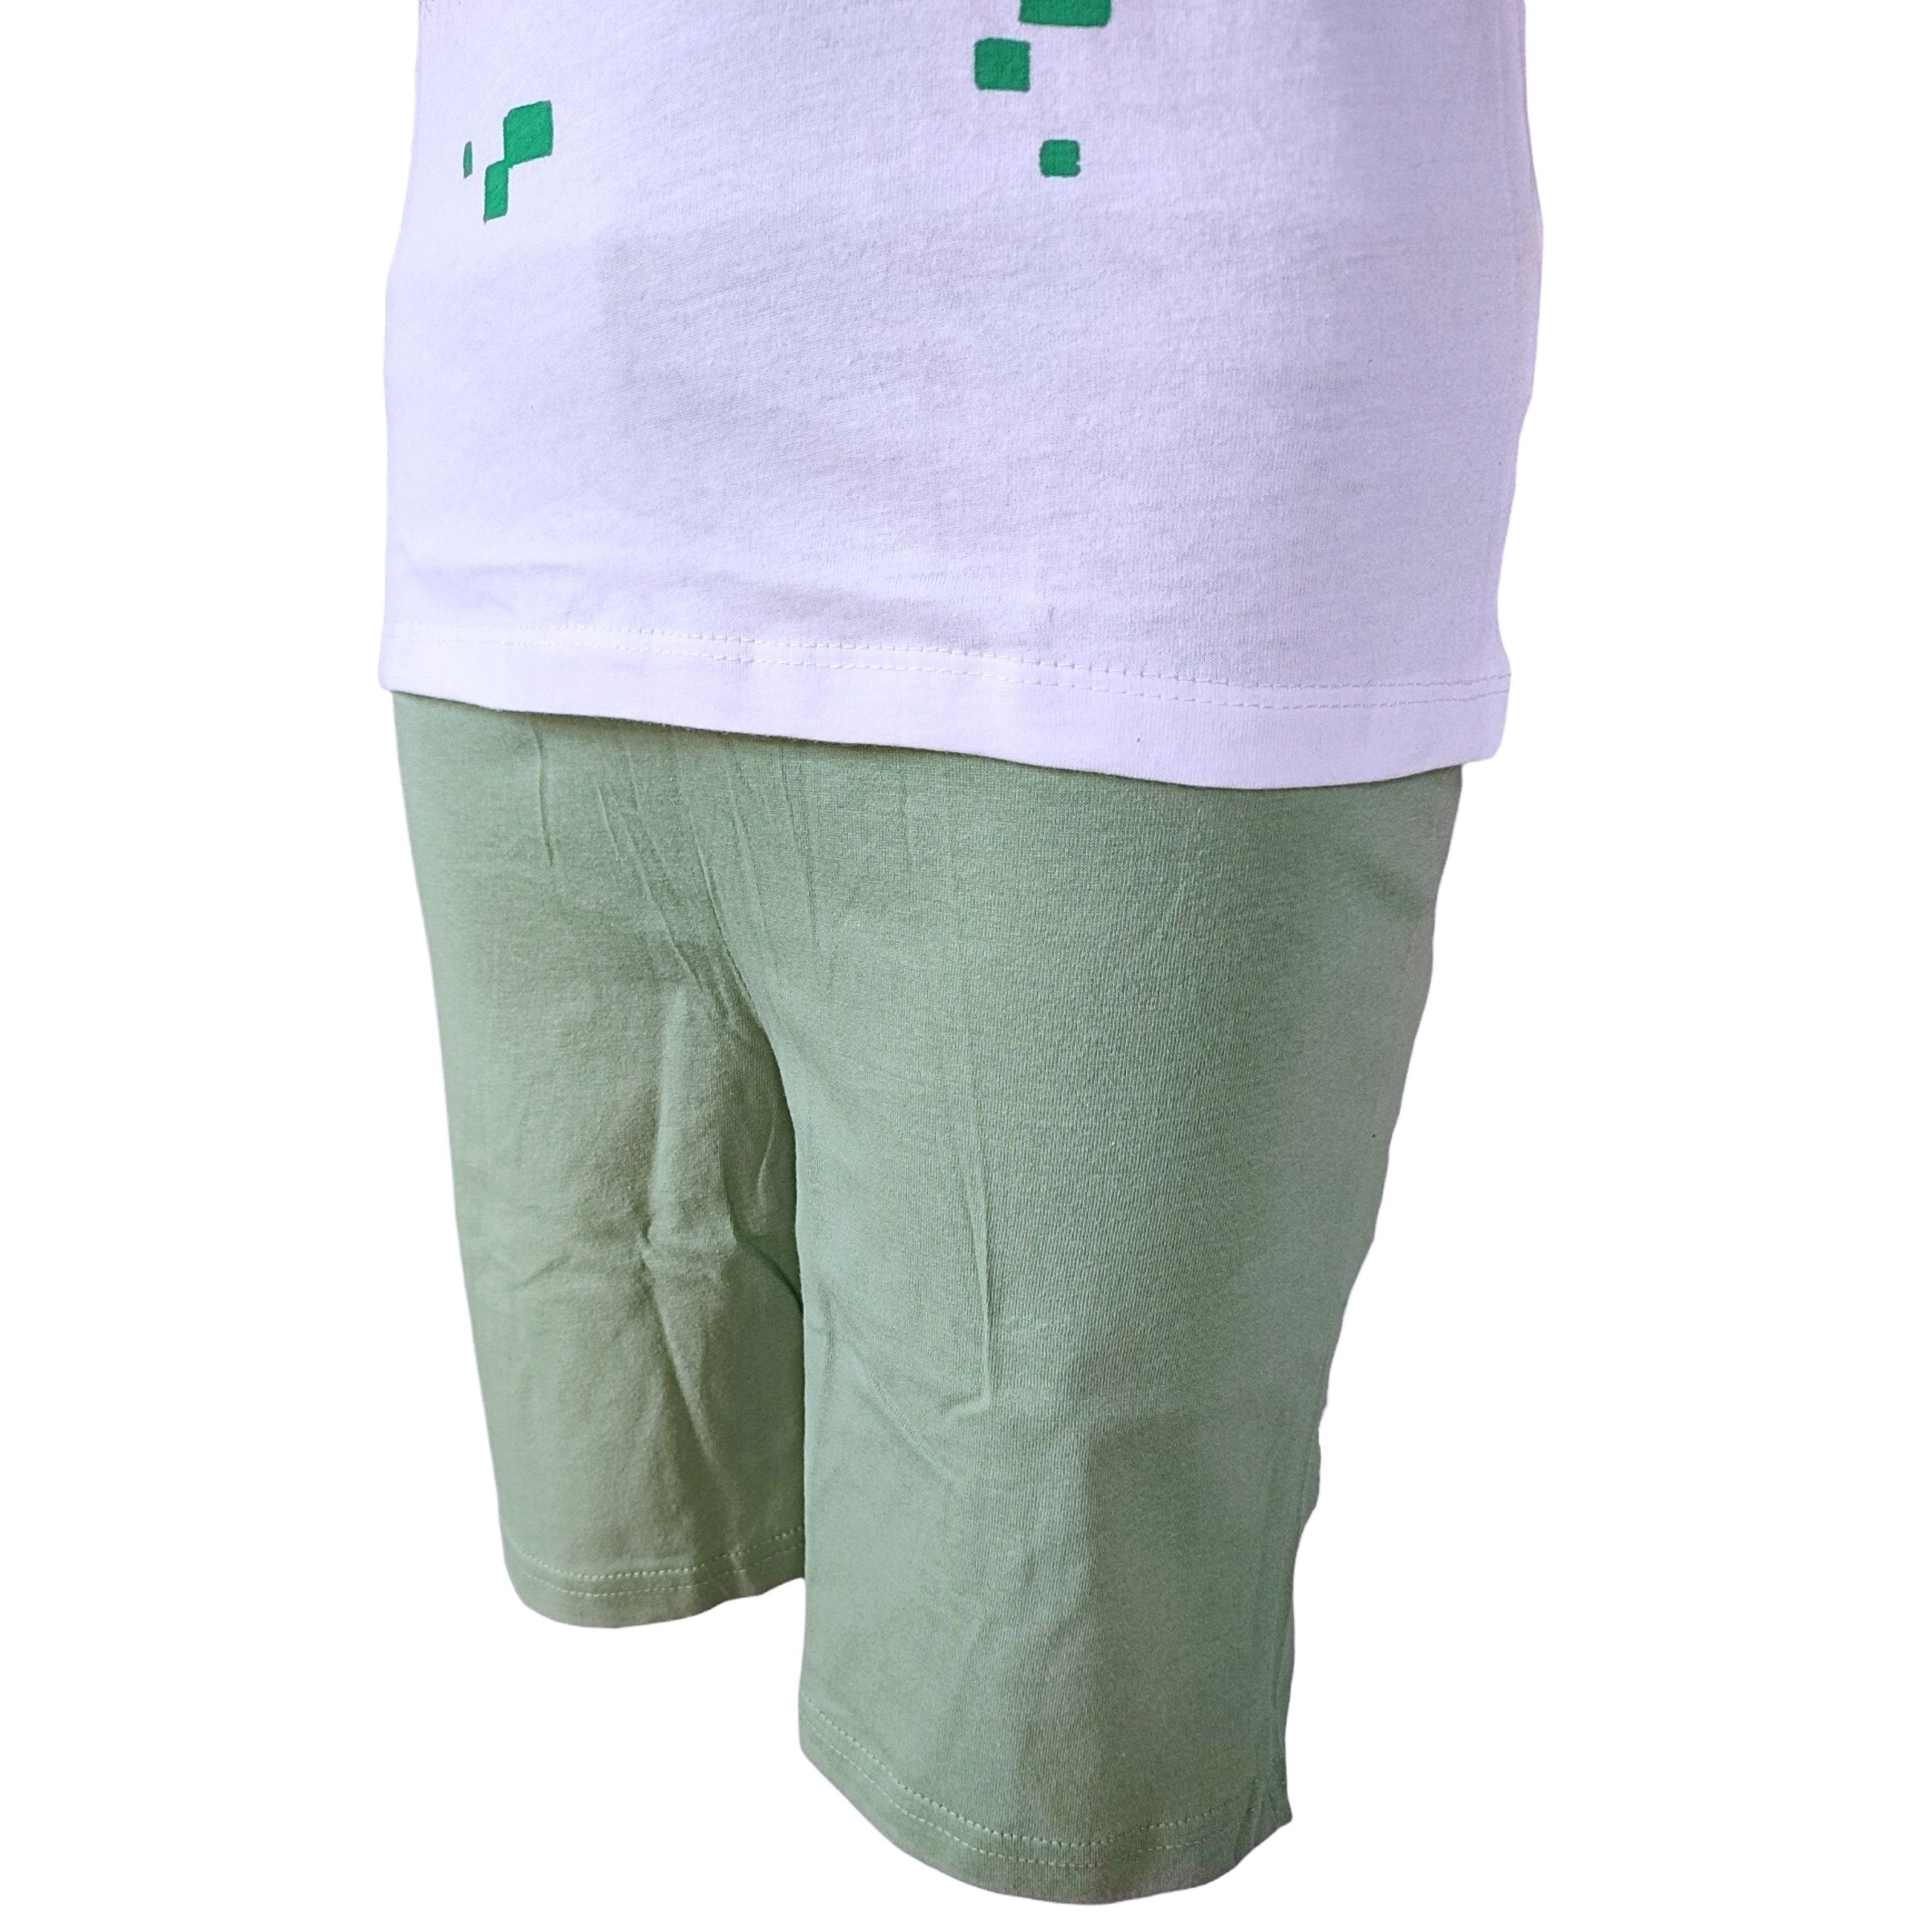 Gr. Kinder Jungen Schlafanzug (2 - kurz Pyjama Shorty Set 116-152 cm tlg) Minecraft Creeper